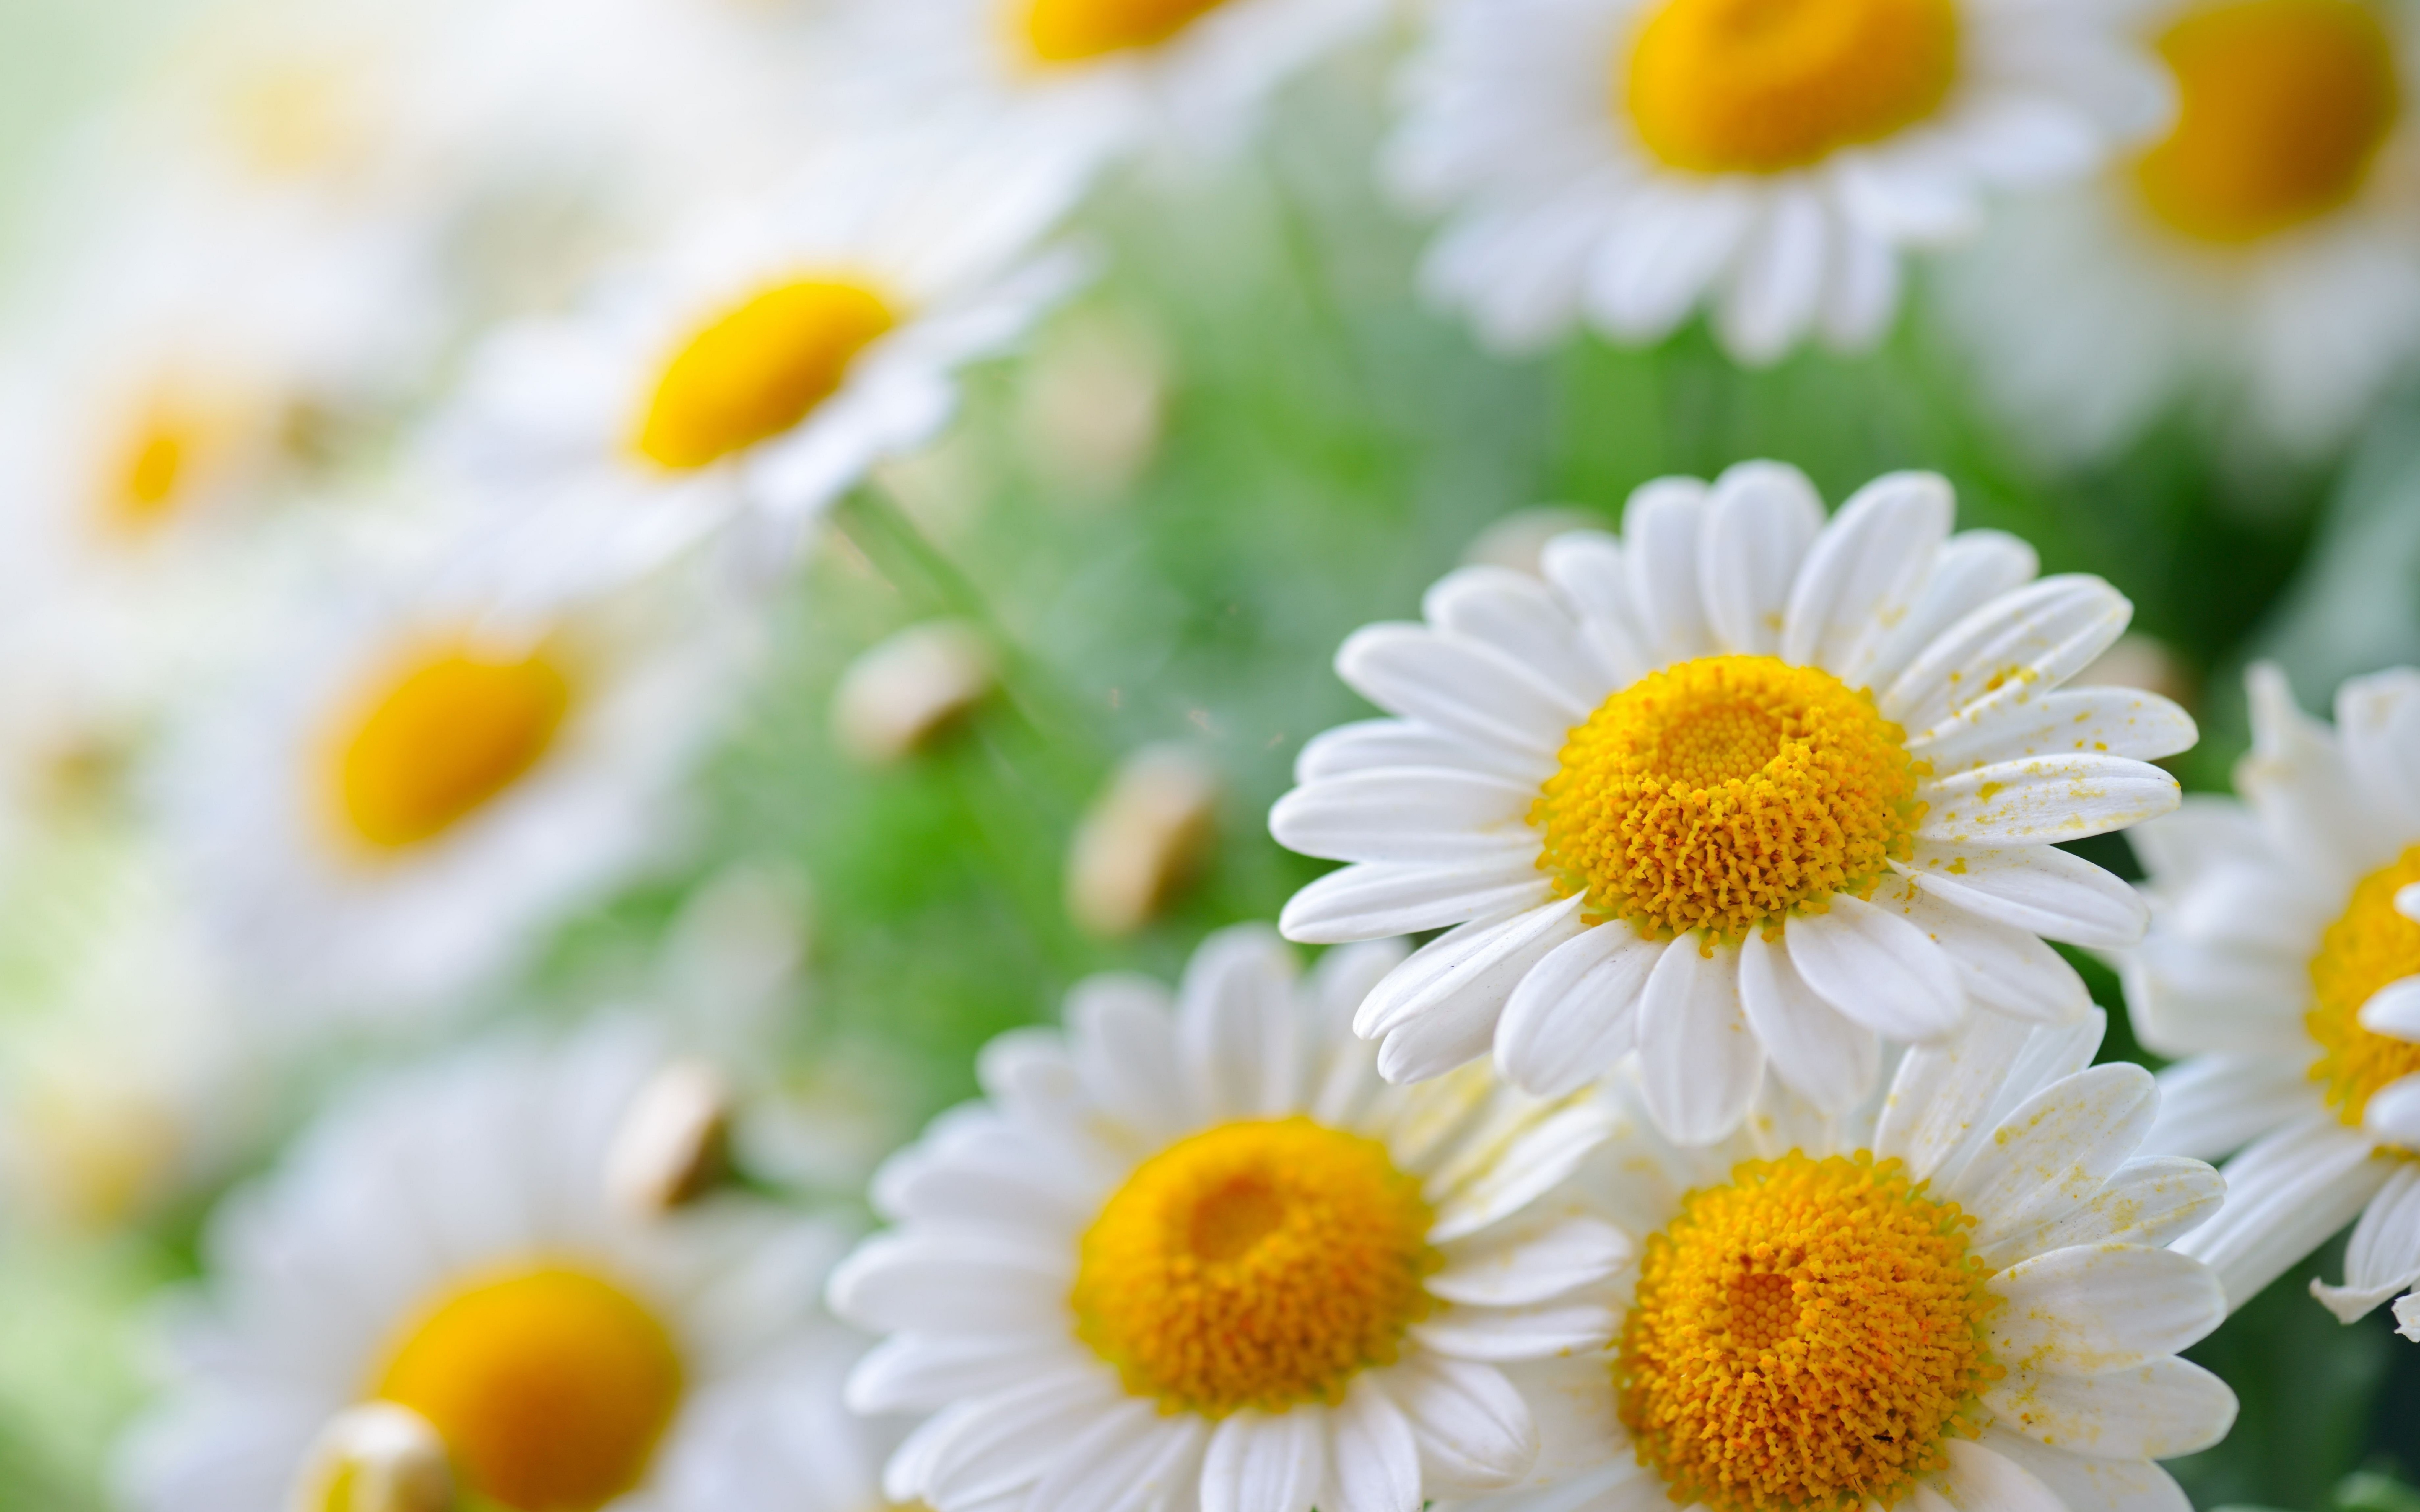 Daisy Flower for 8192 x 5120 8K Ultra Wide resolution